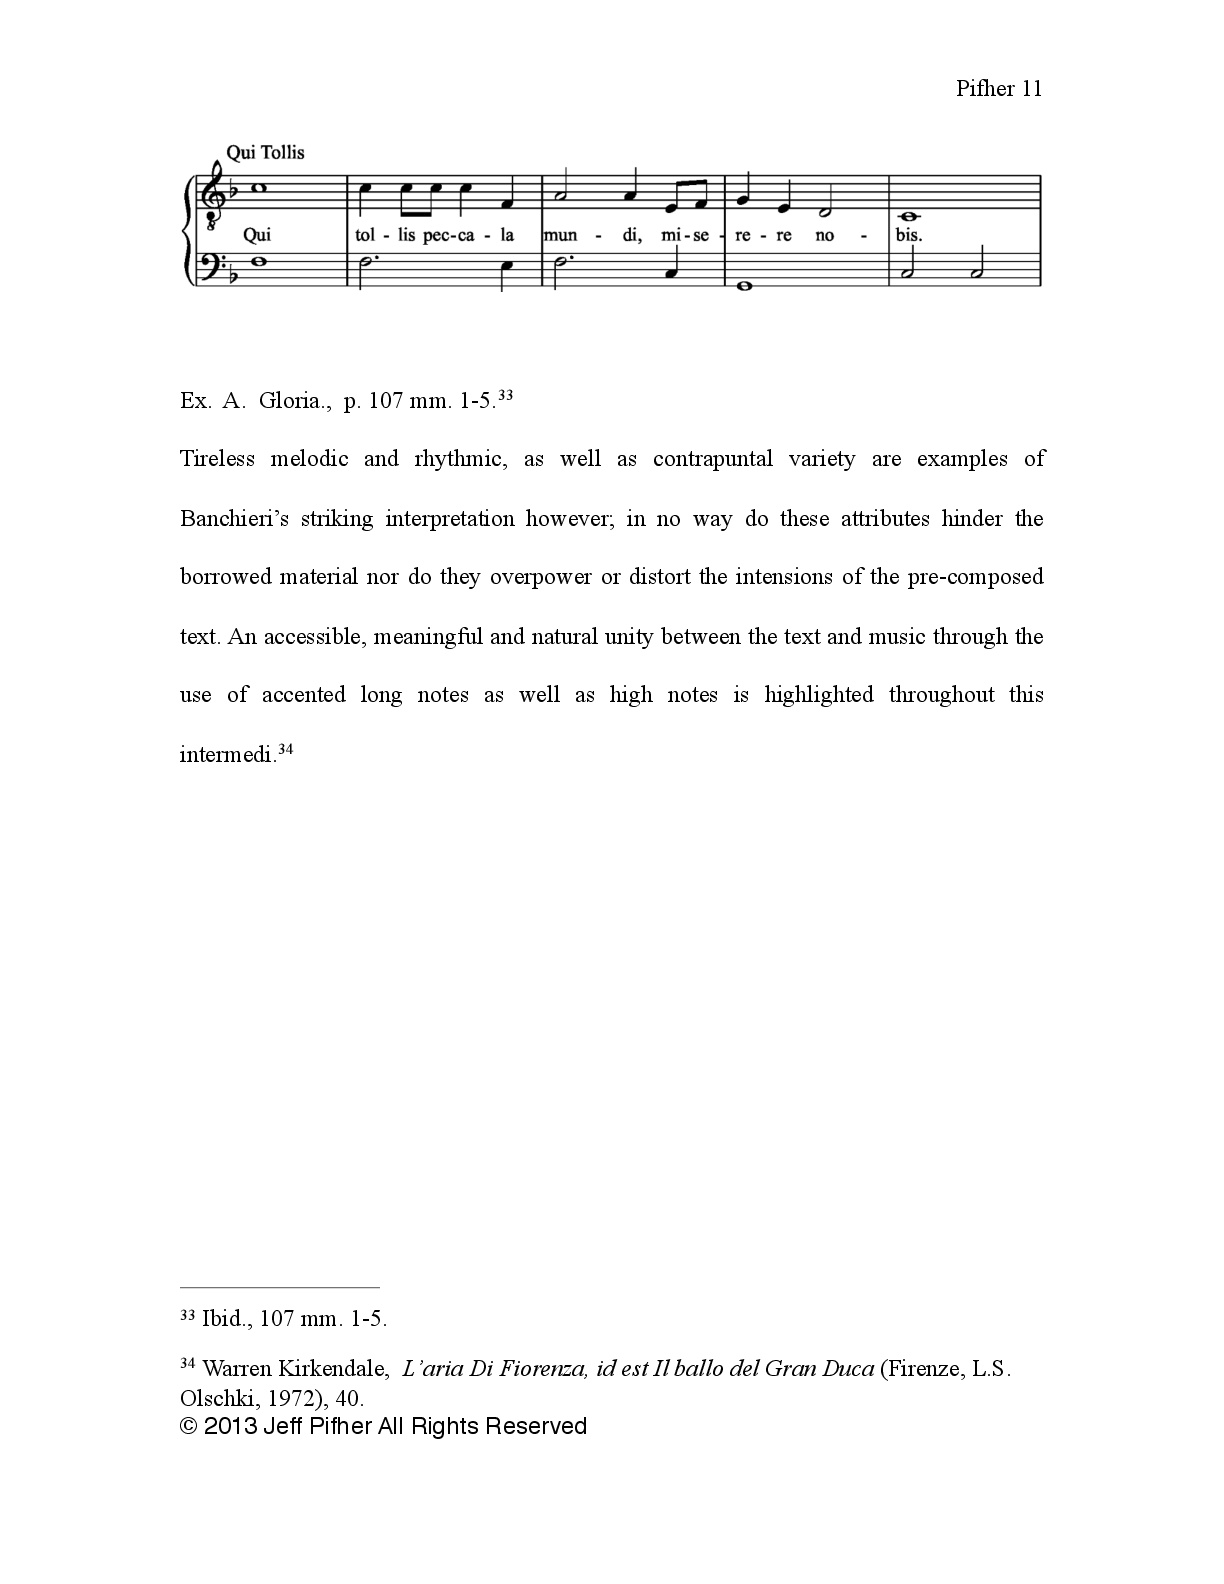 Jeff-Pifher-Music-and-Mediciean-Influences-(Academic-Series)-011.jpg